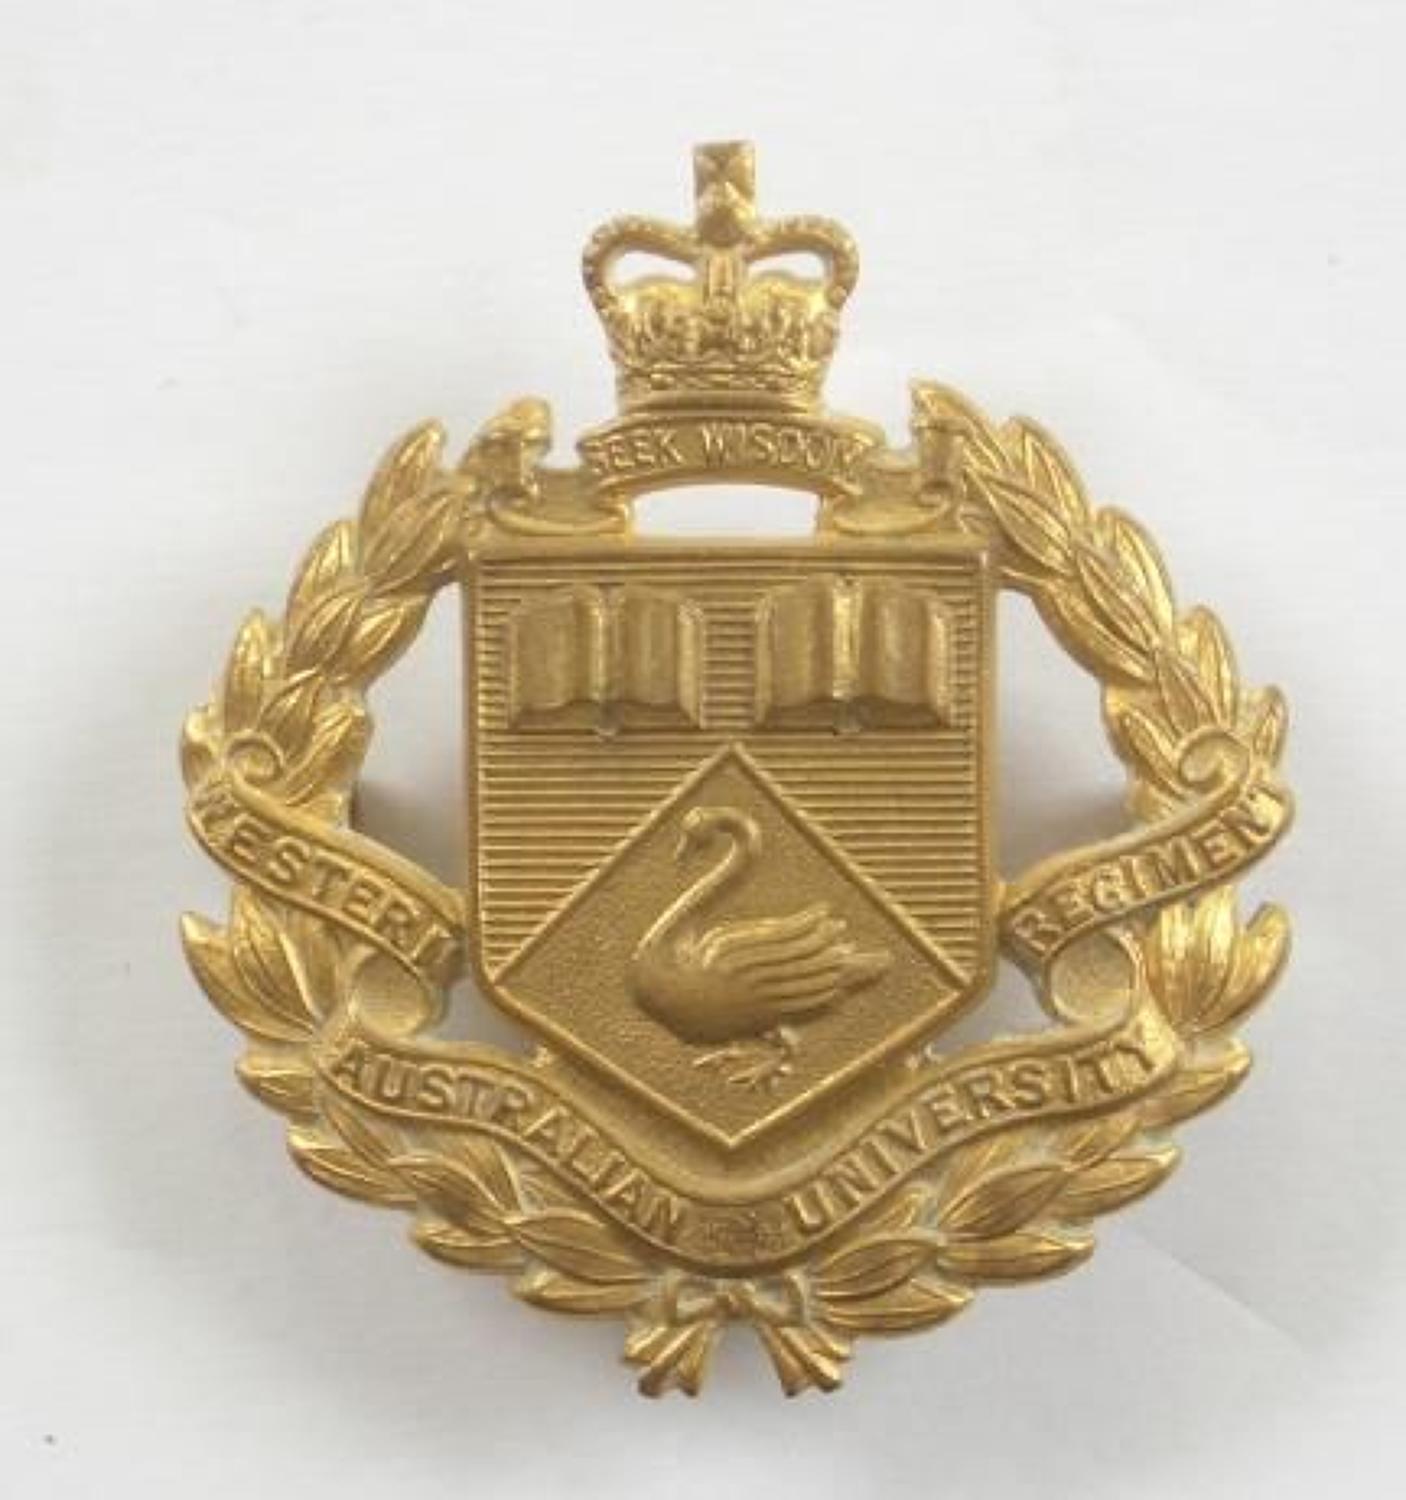 Western Australian University Regiment slouch hat badge by Stokes.